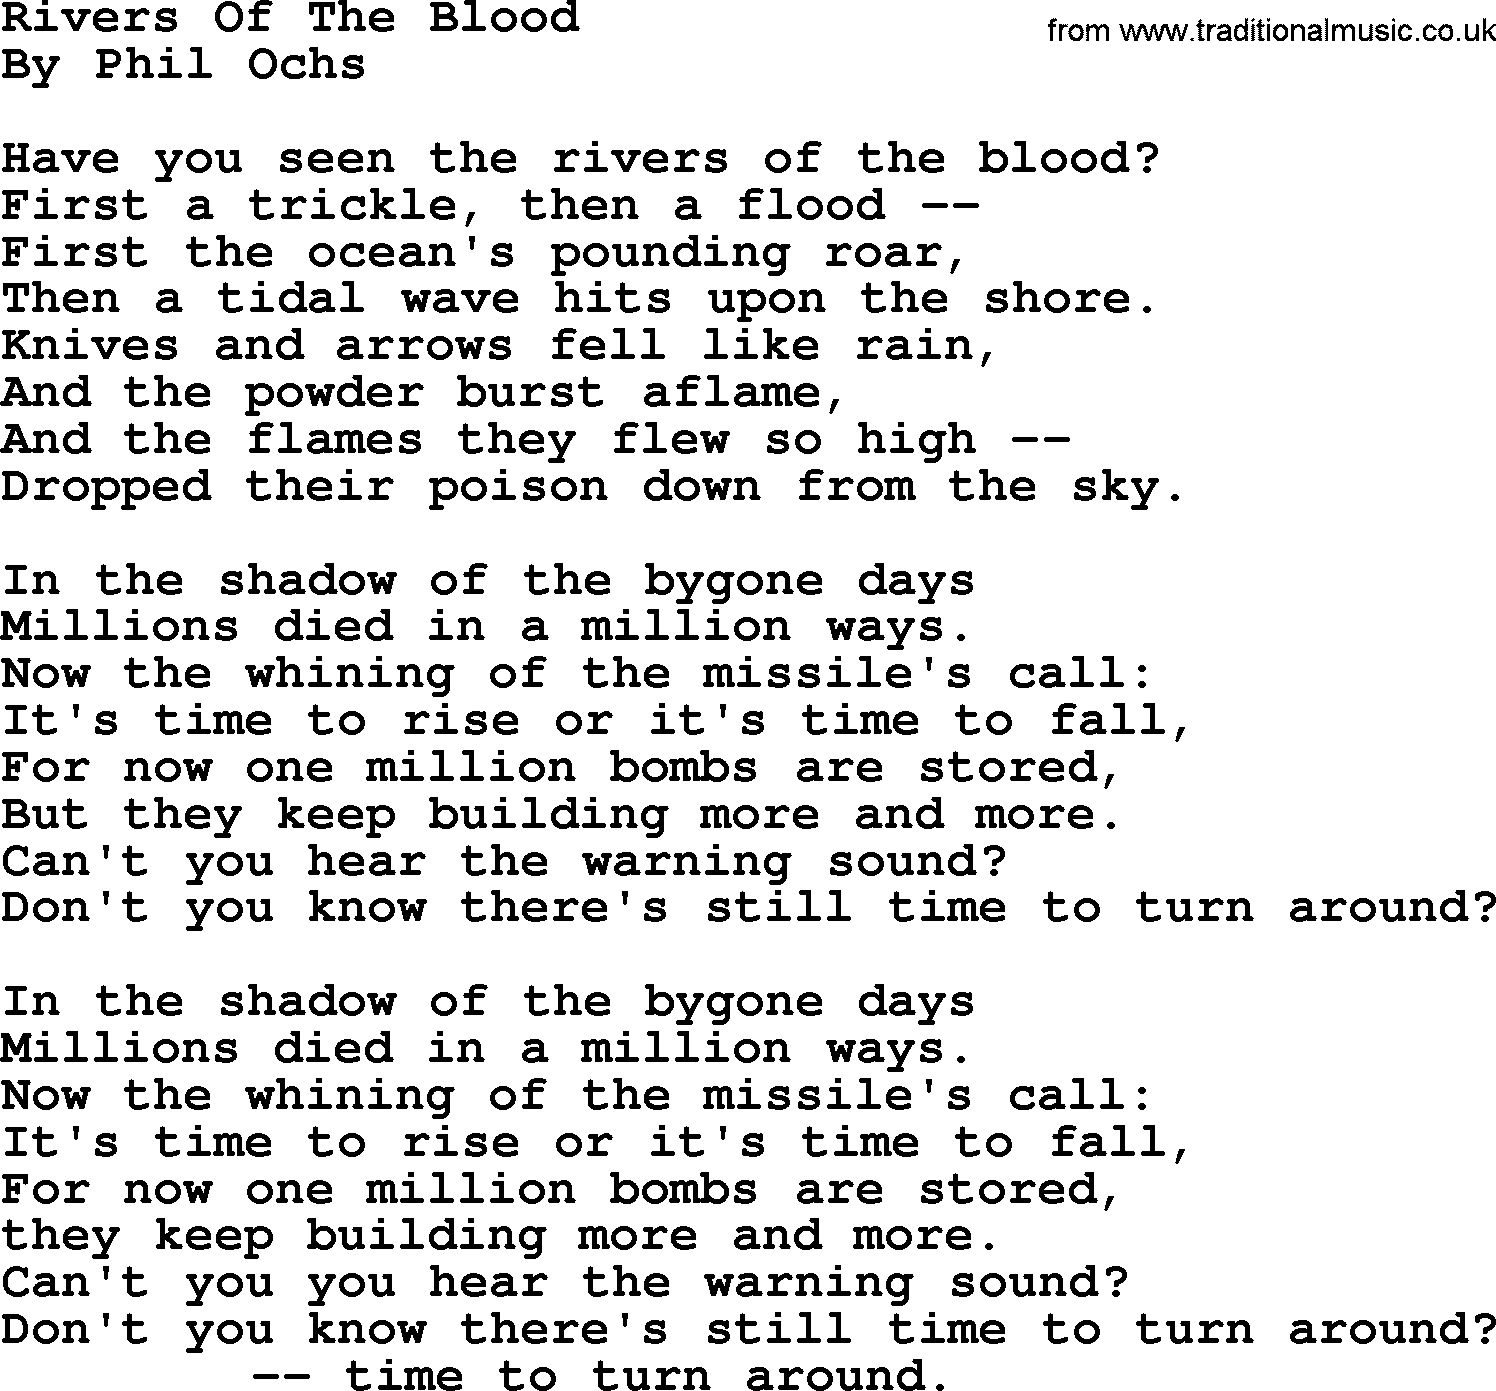 Phil Ochs song Rivers Of The Blood, lyrics